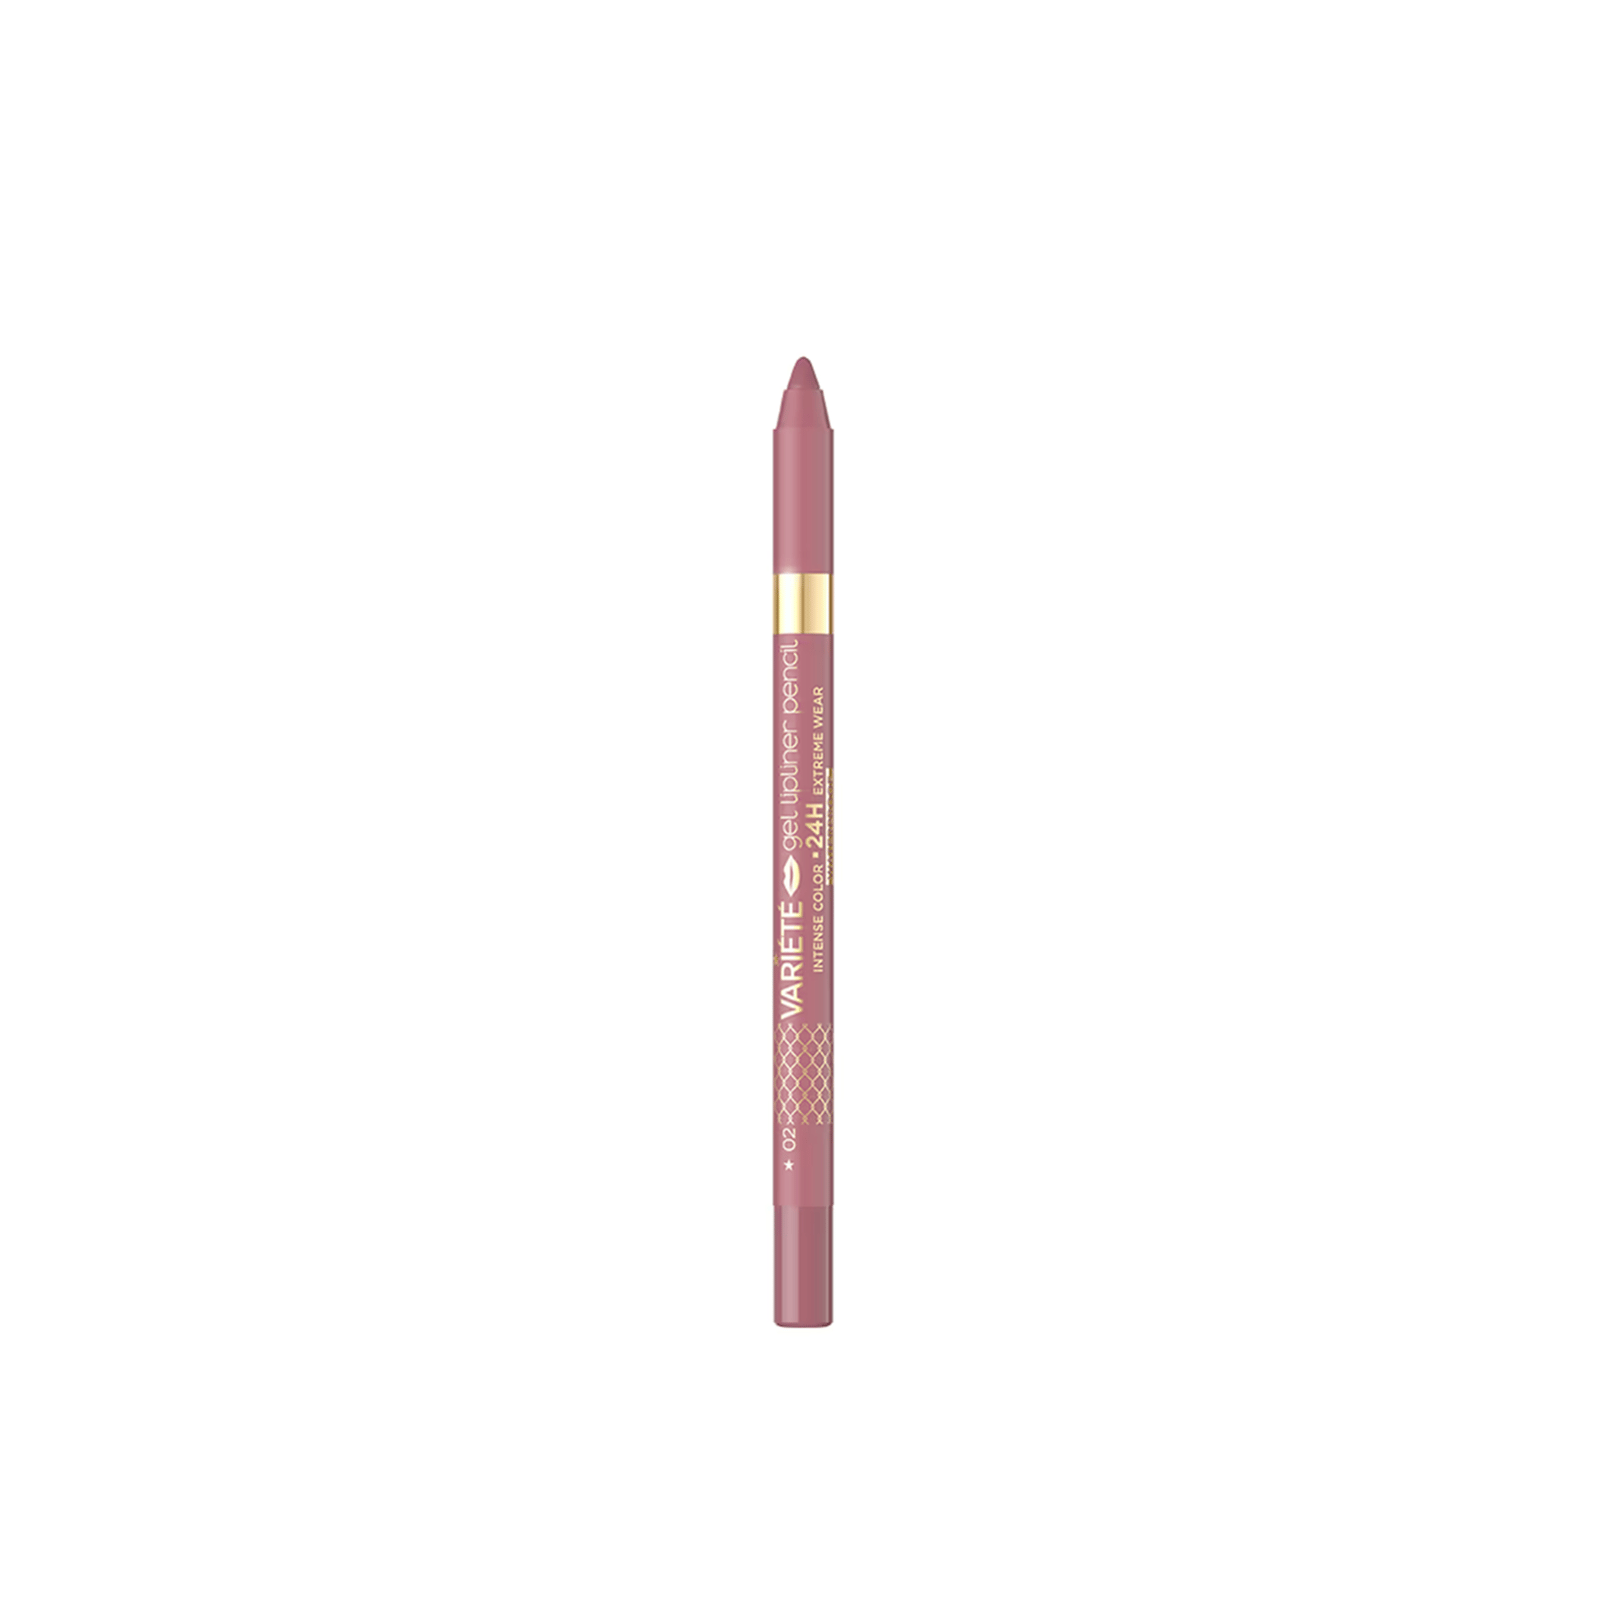 Eveline Cosmetics Variété Gel Lipliner Pencil 24h Waterproof 02 Pinkish